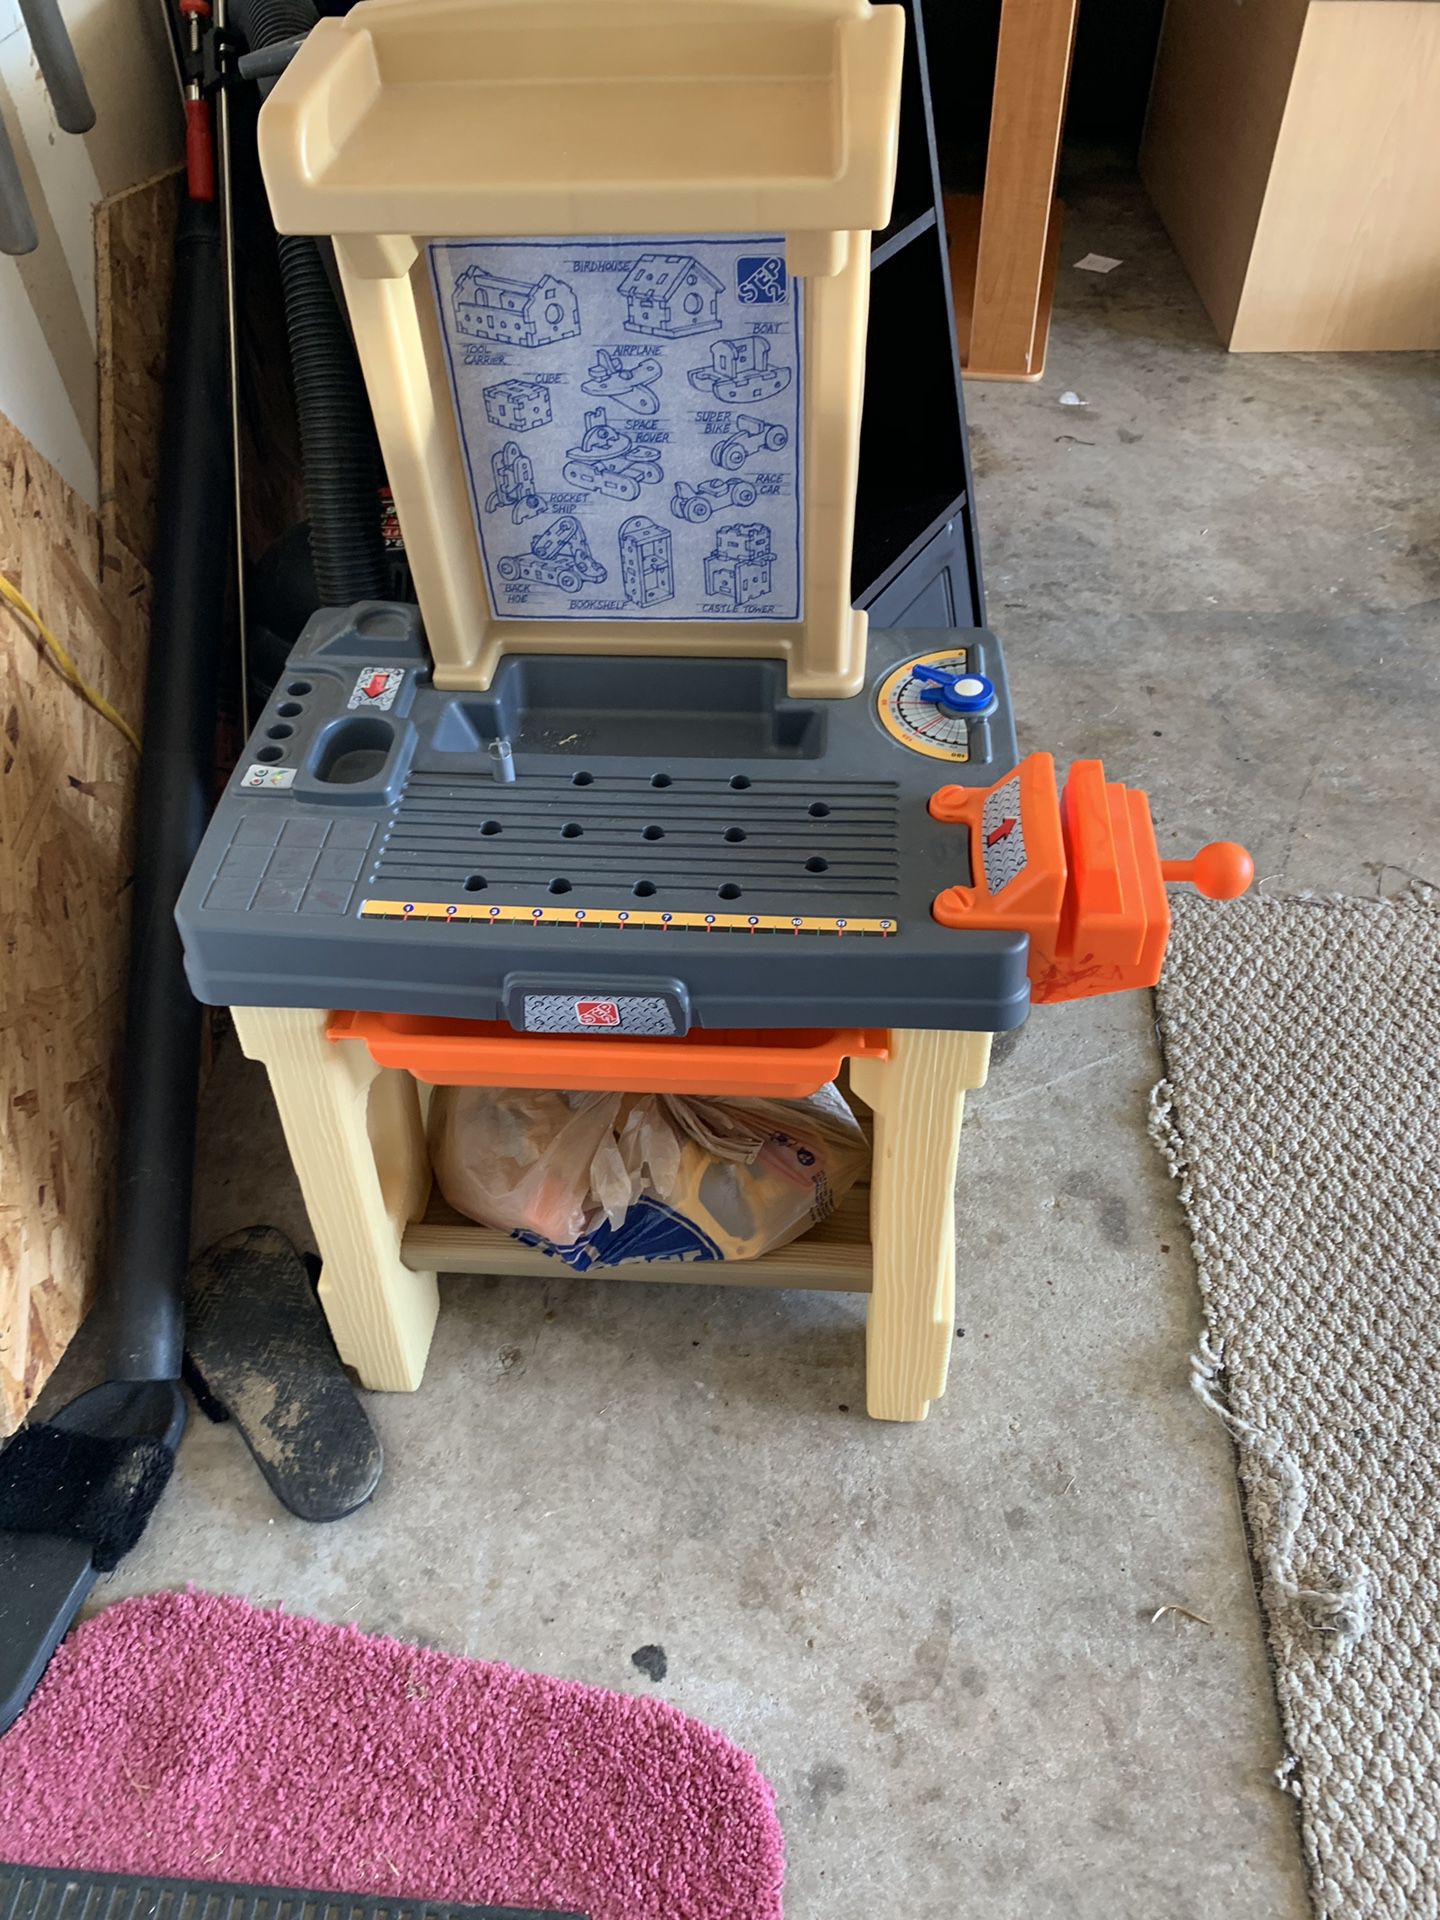 Toy work bench